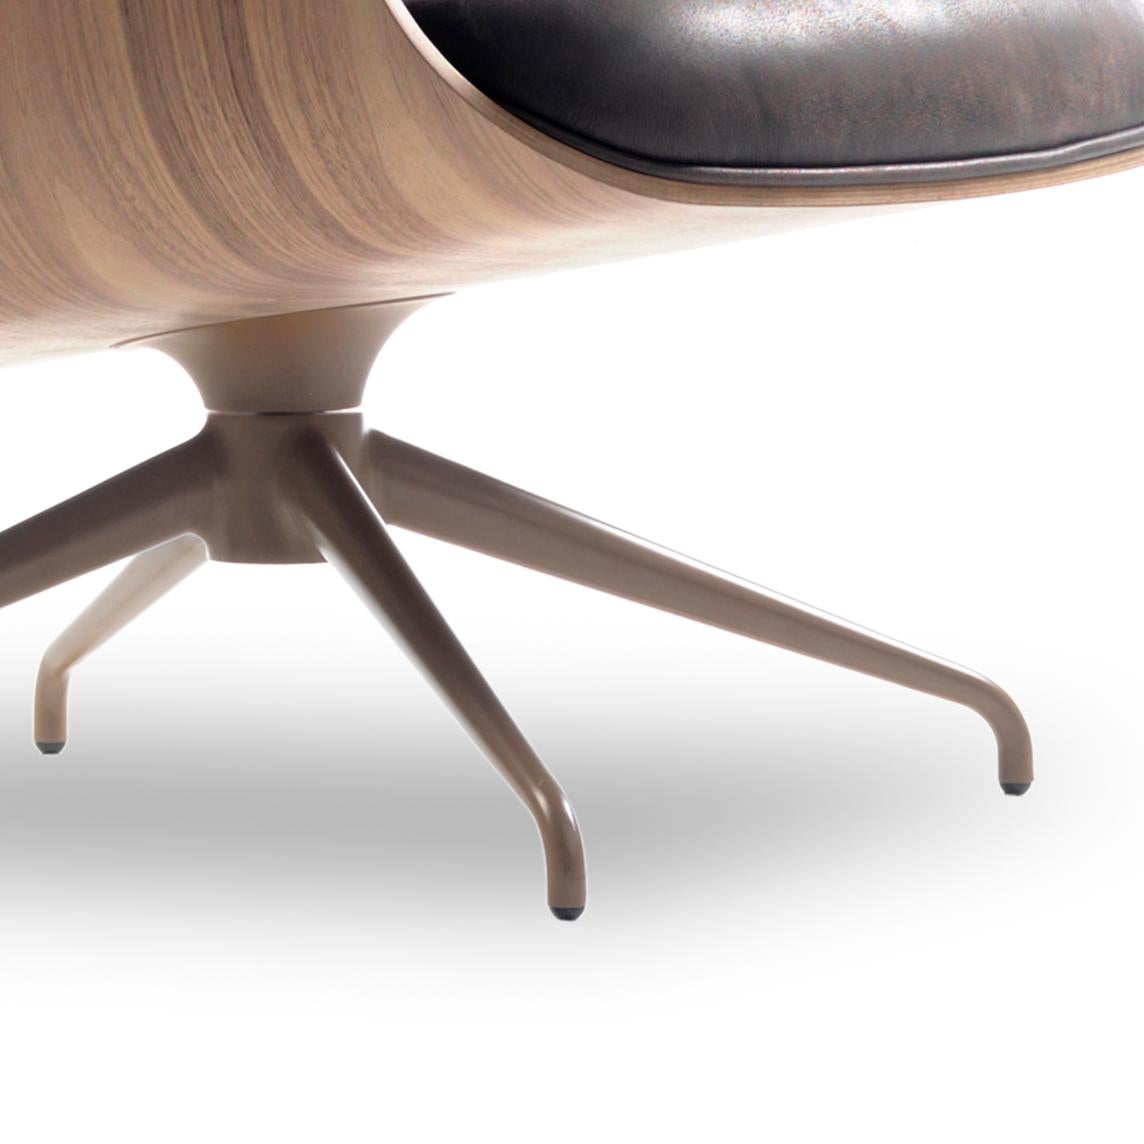 Spanish Jaime Hayon, Contemporary, Playwood Walnut Leather Upholstery Lounger Armchair 